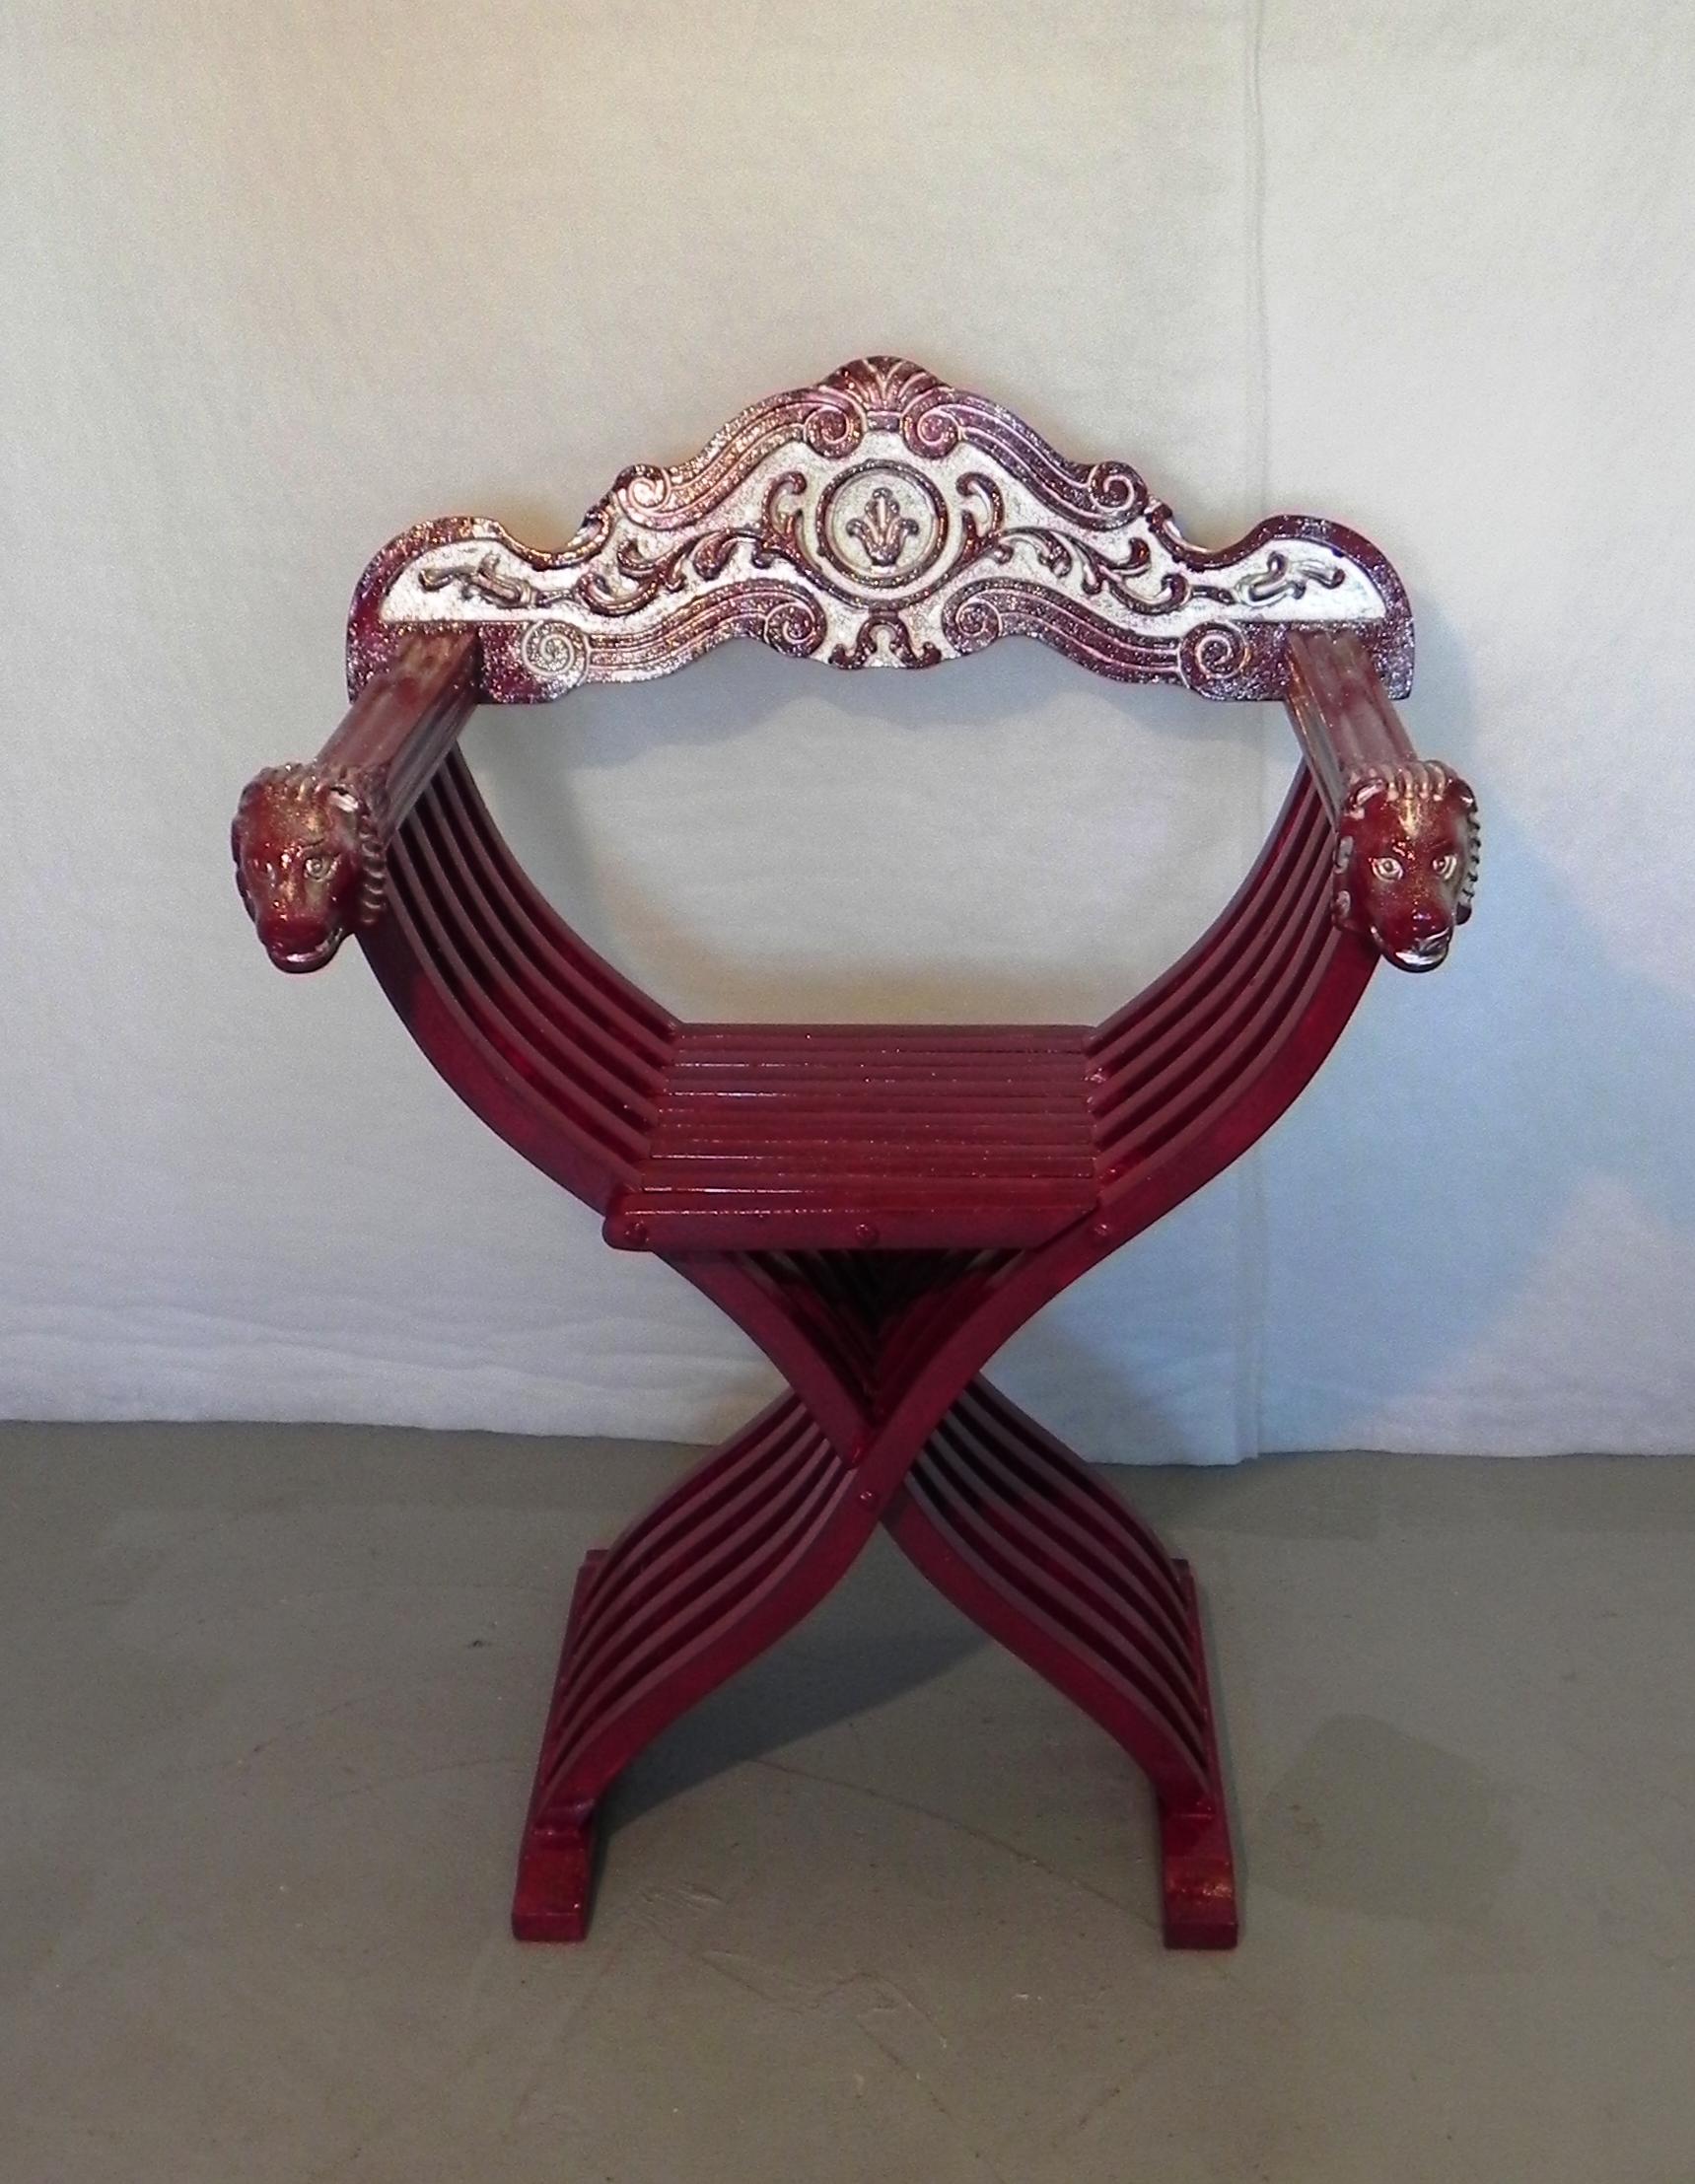 Renaissance Revival savonarola Chair, Red Throne For Sale